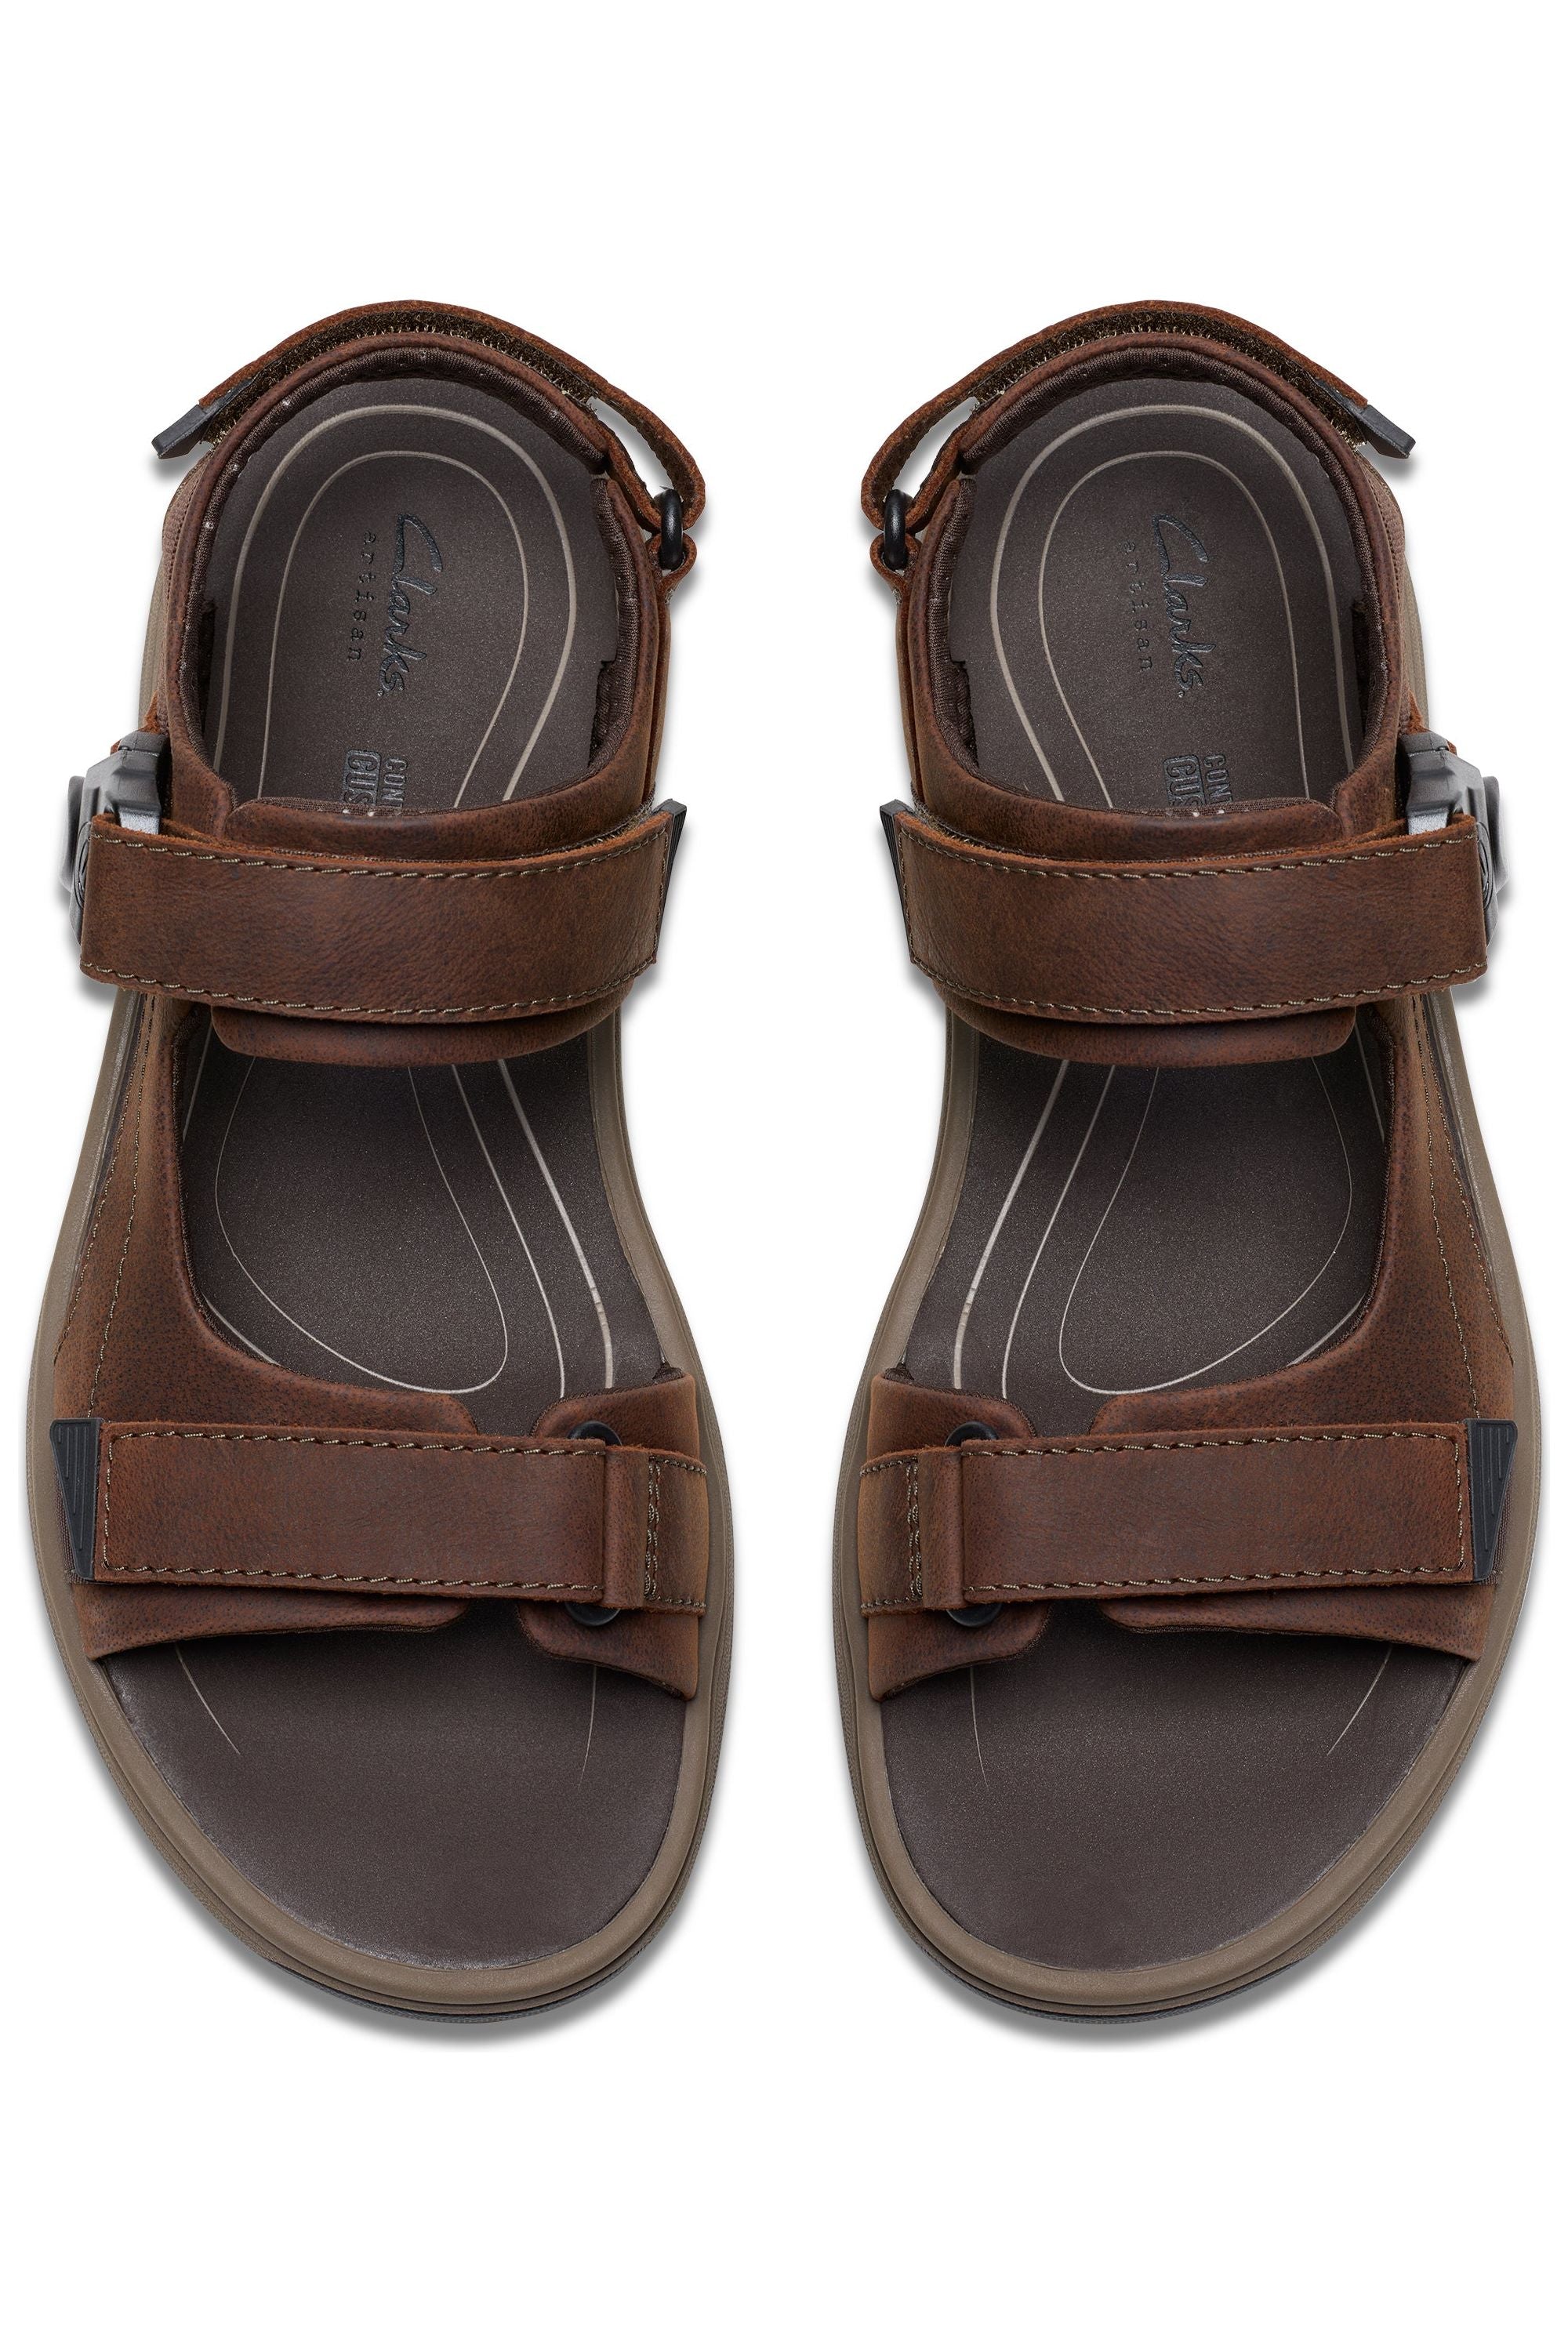 Clarks Saltway Trail sandal in dark brown leather